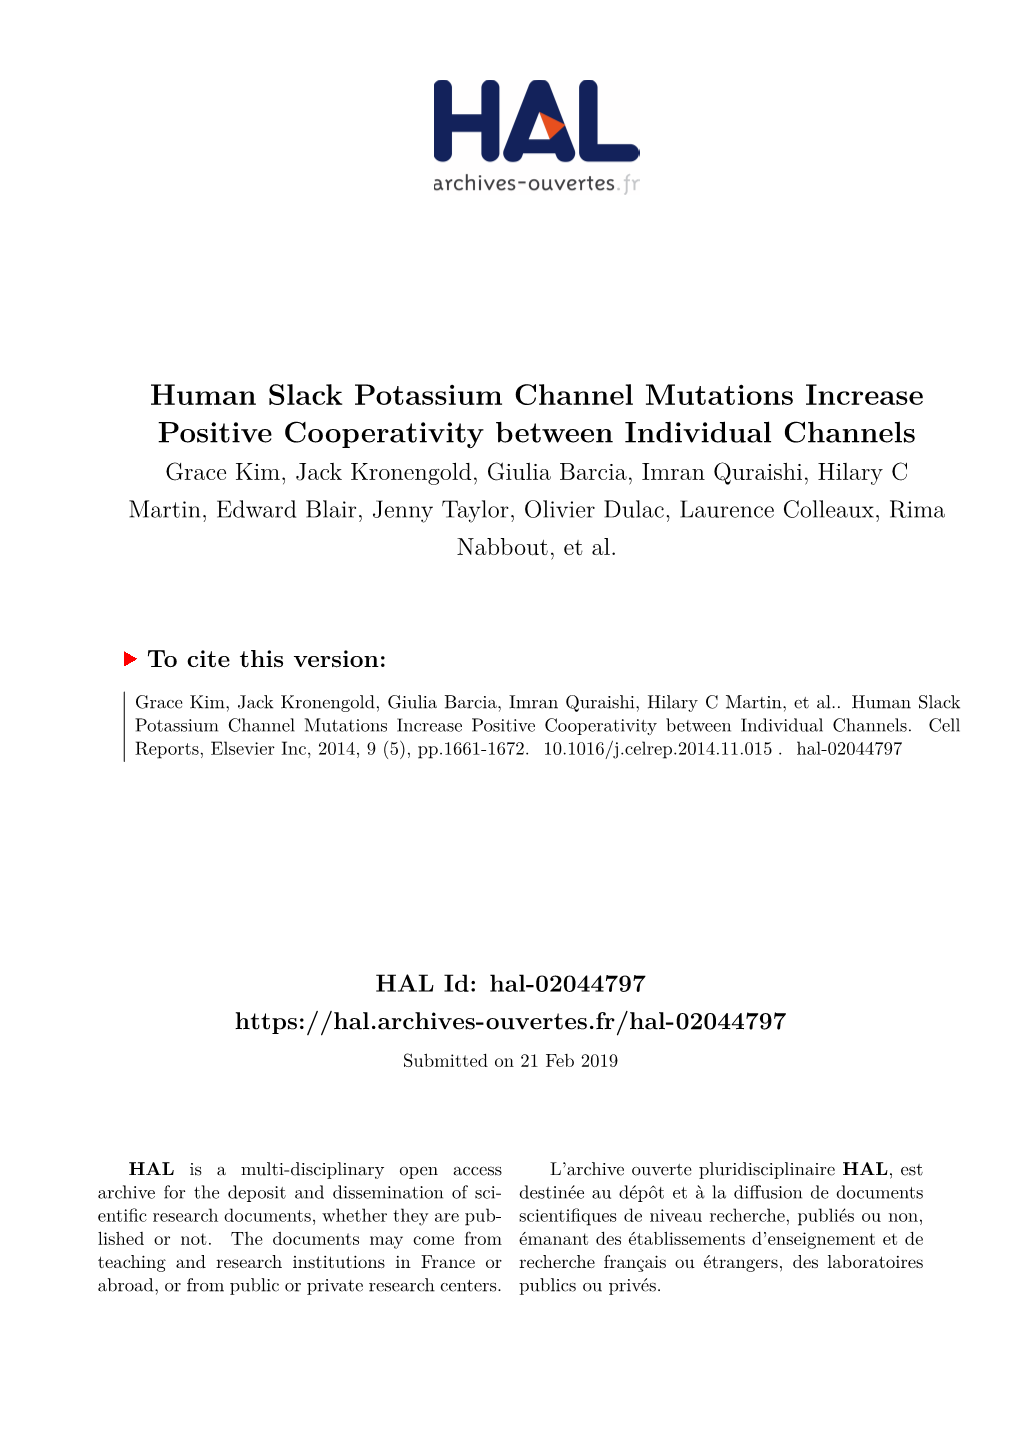 Human Slack Potassium Channel Mutations